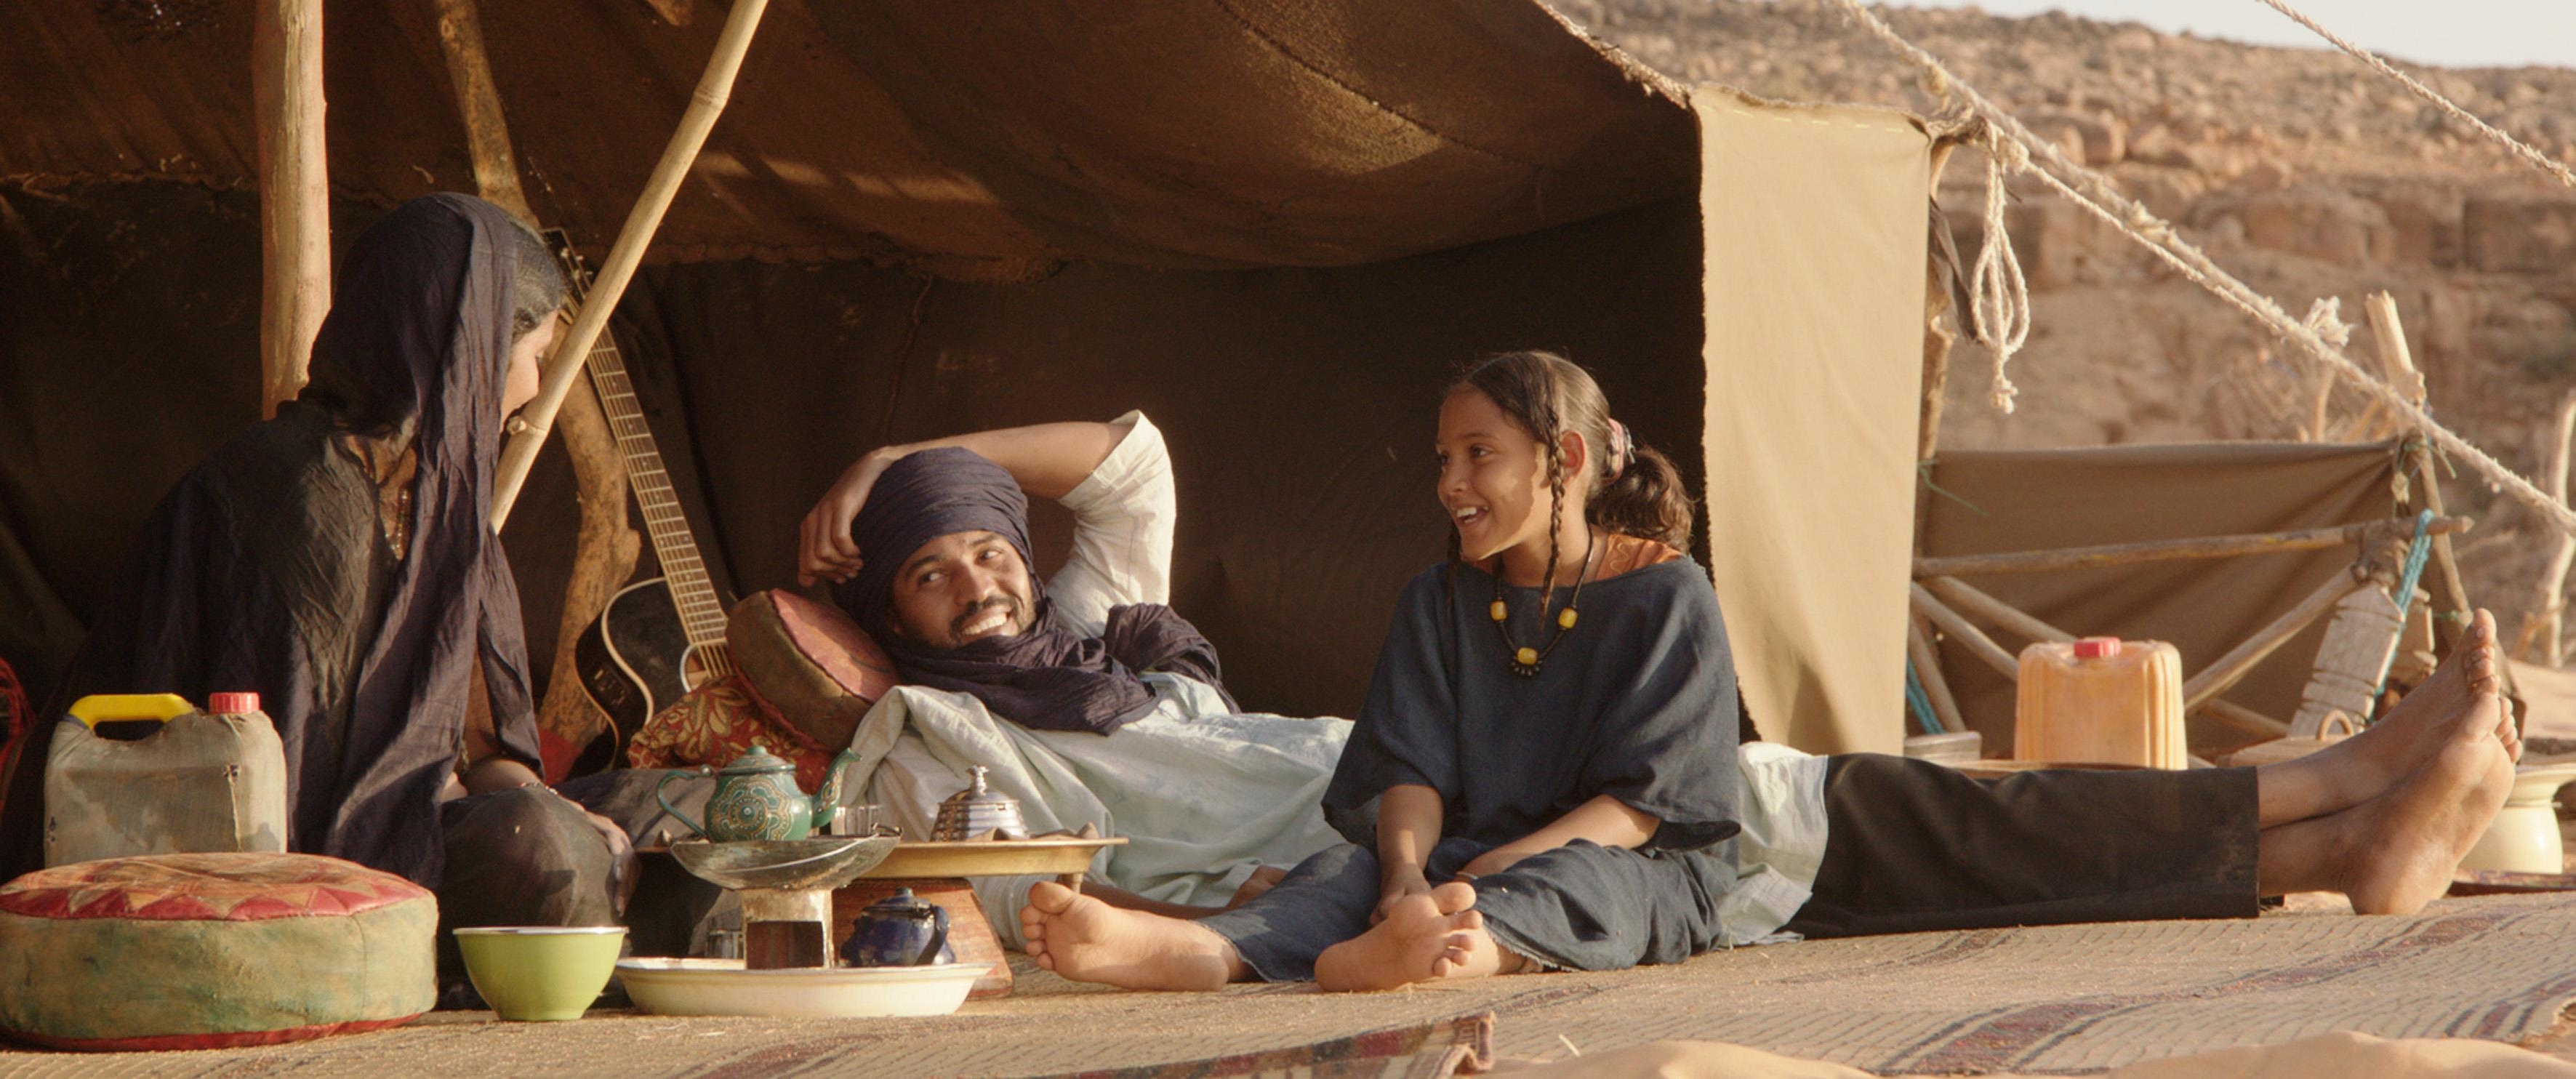 Image du film Timbuktu 095eab56-783f-4004-8cf9-68ec59f601ab